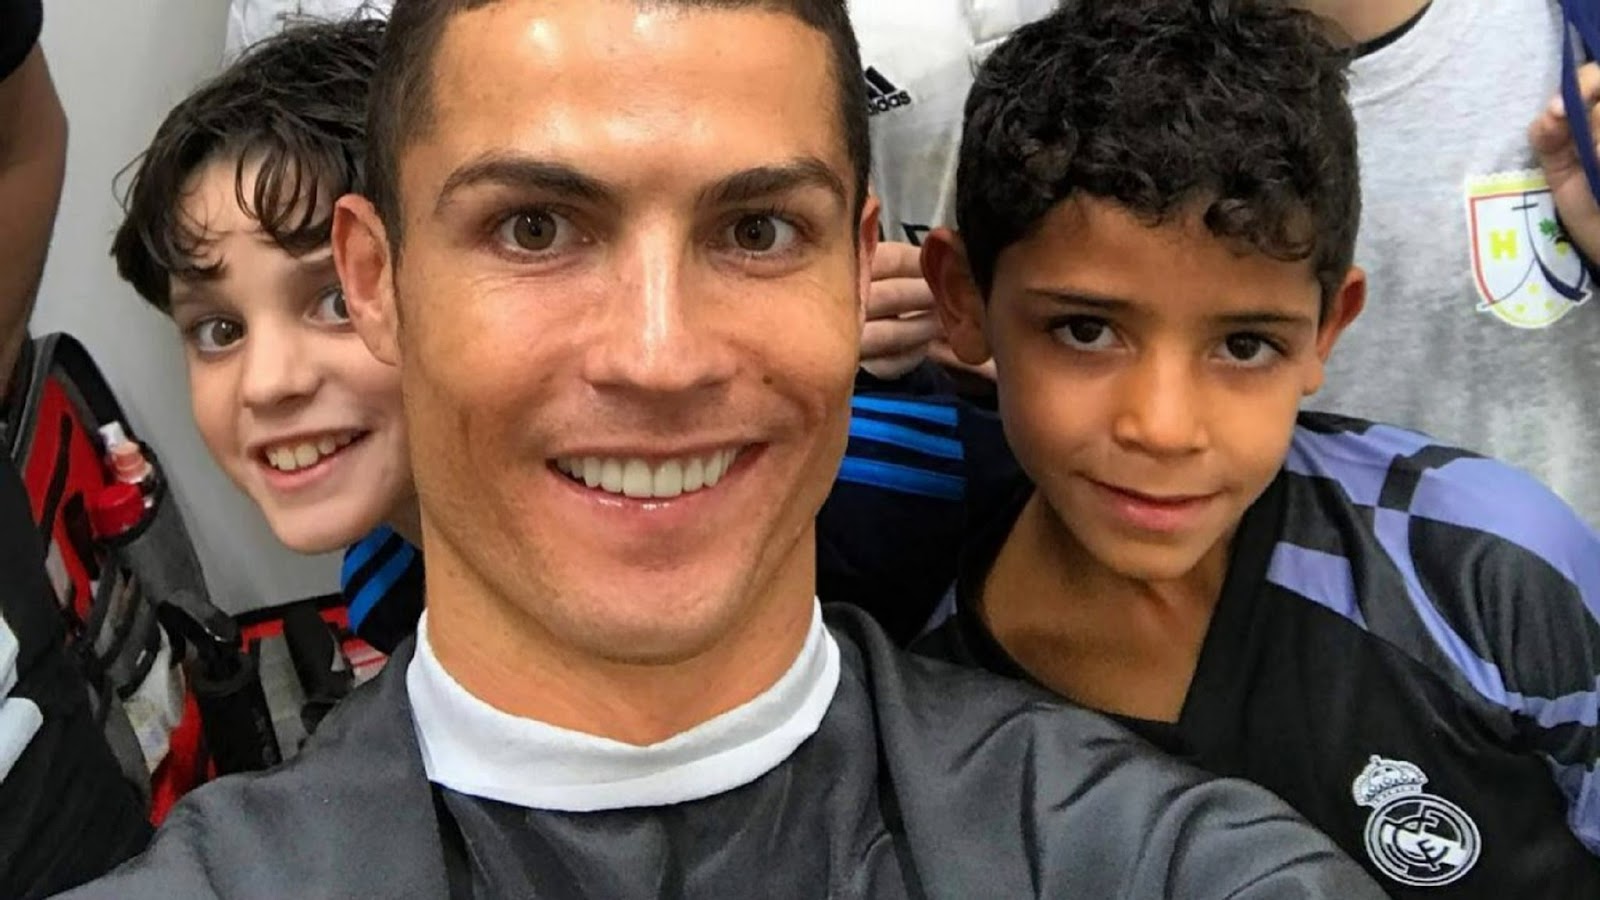 FOOTBALL : CRISTIANO RONALDO'S 7-YEAR-OLD SON JR HITS A SCREAMER FROM